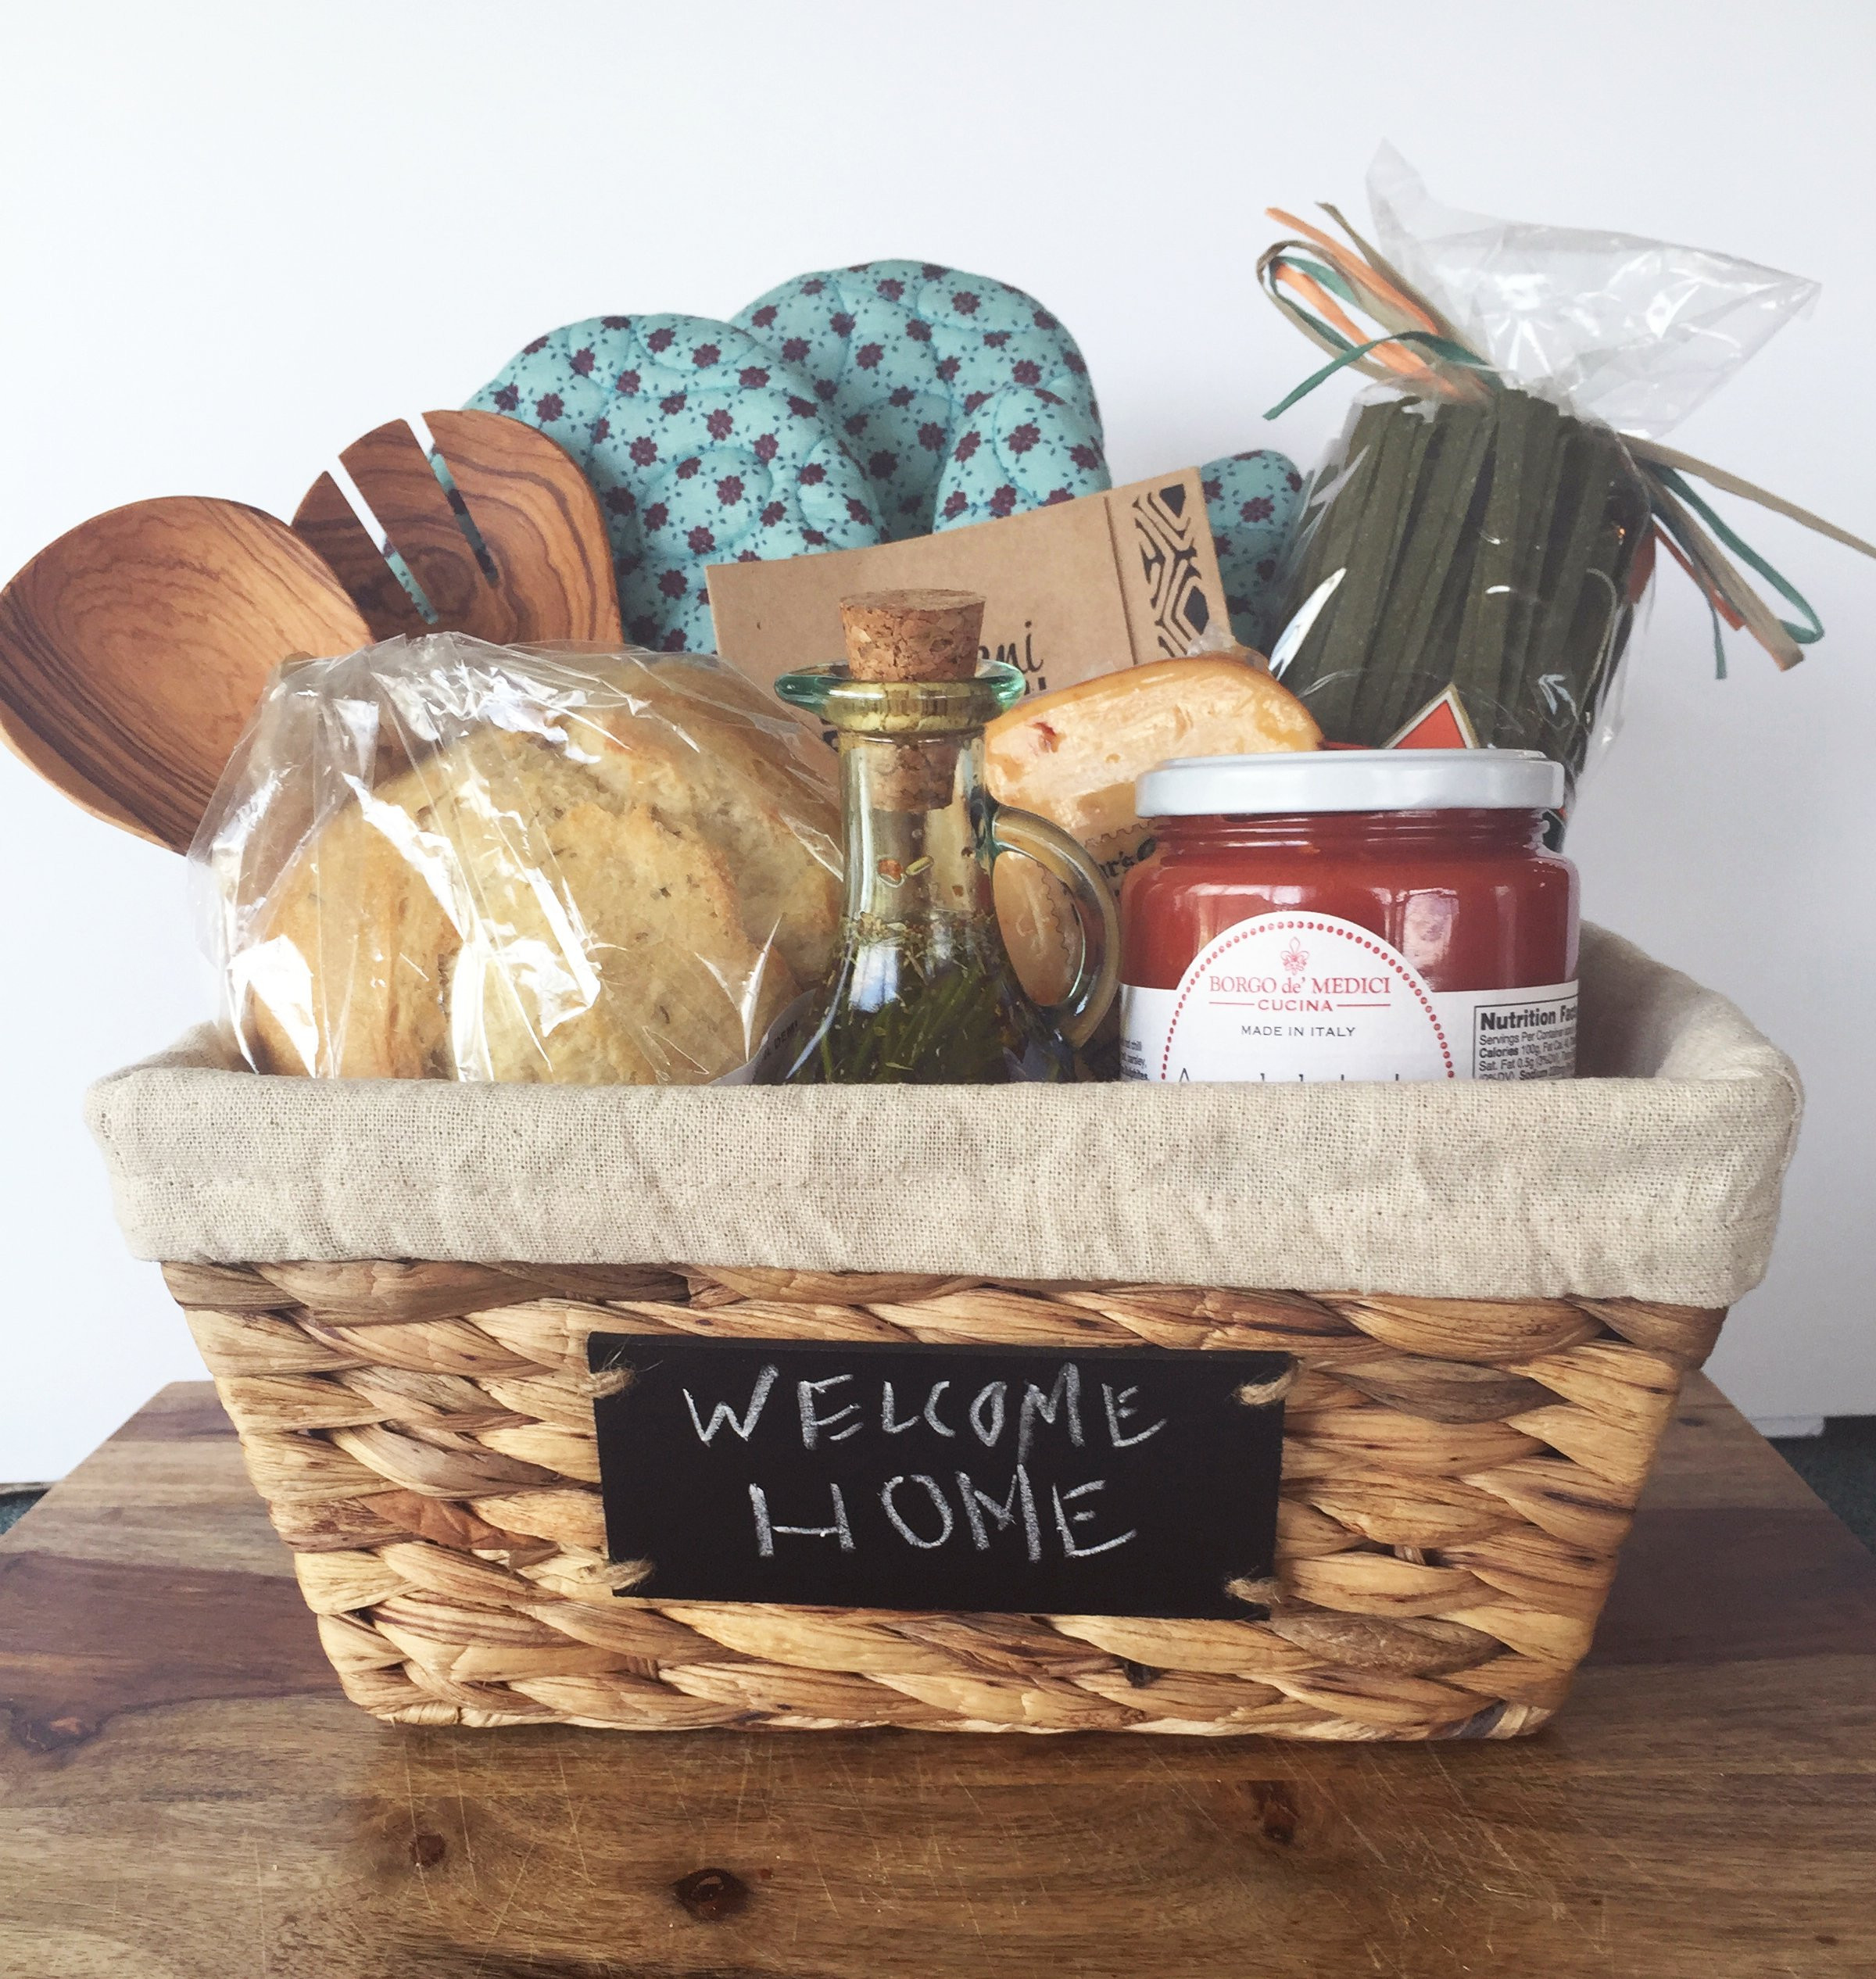 Housewarming Gift Basket Ideas
 DIY HOUSEWARMING GIFT BASKET T A S T Y S O U T H E R N